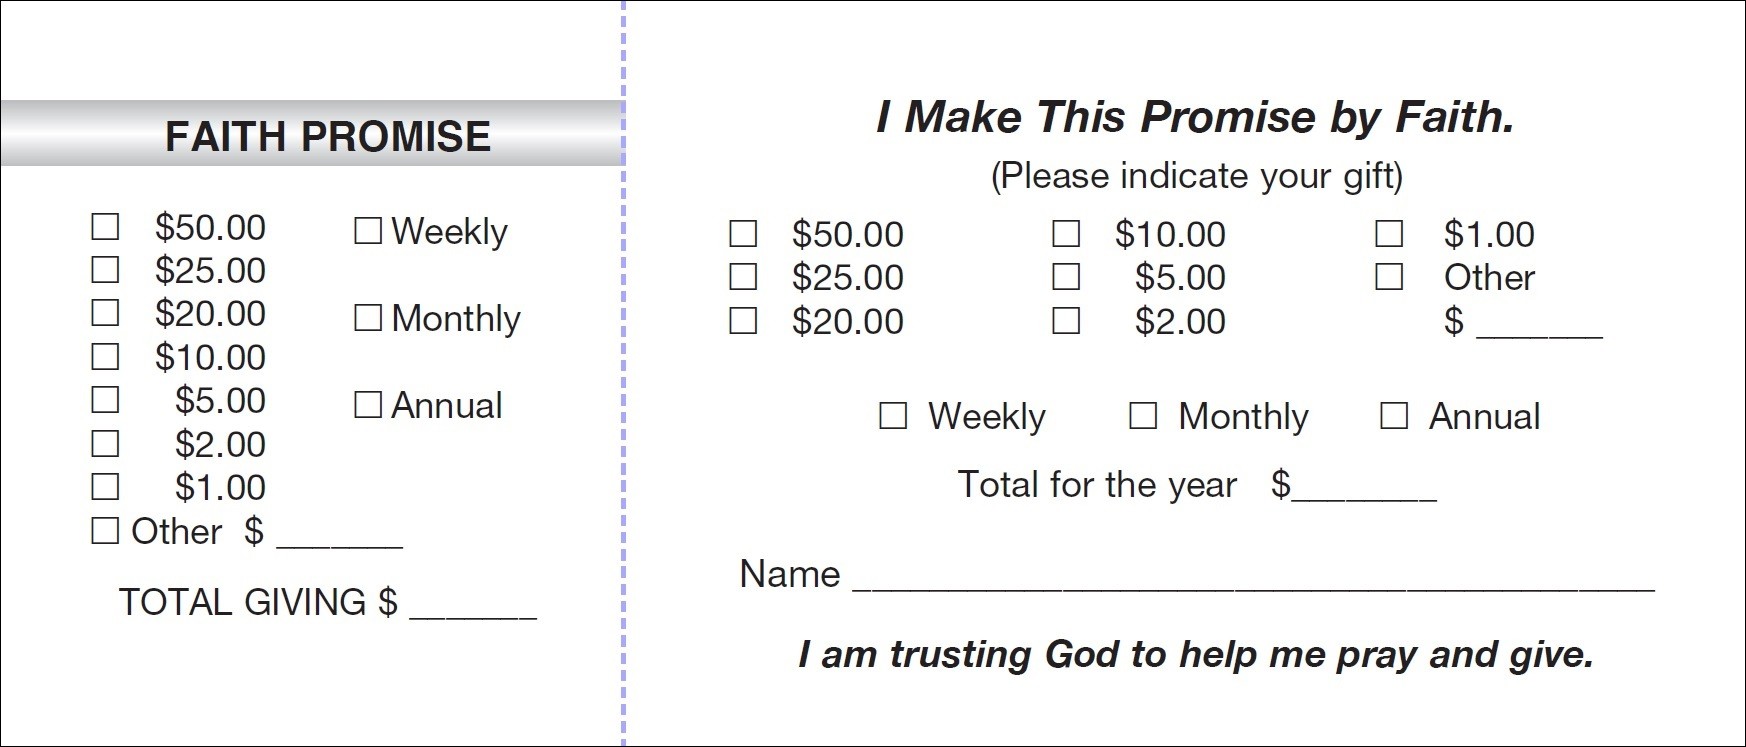 My Faith Promise for Missions Card